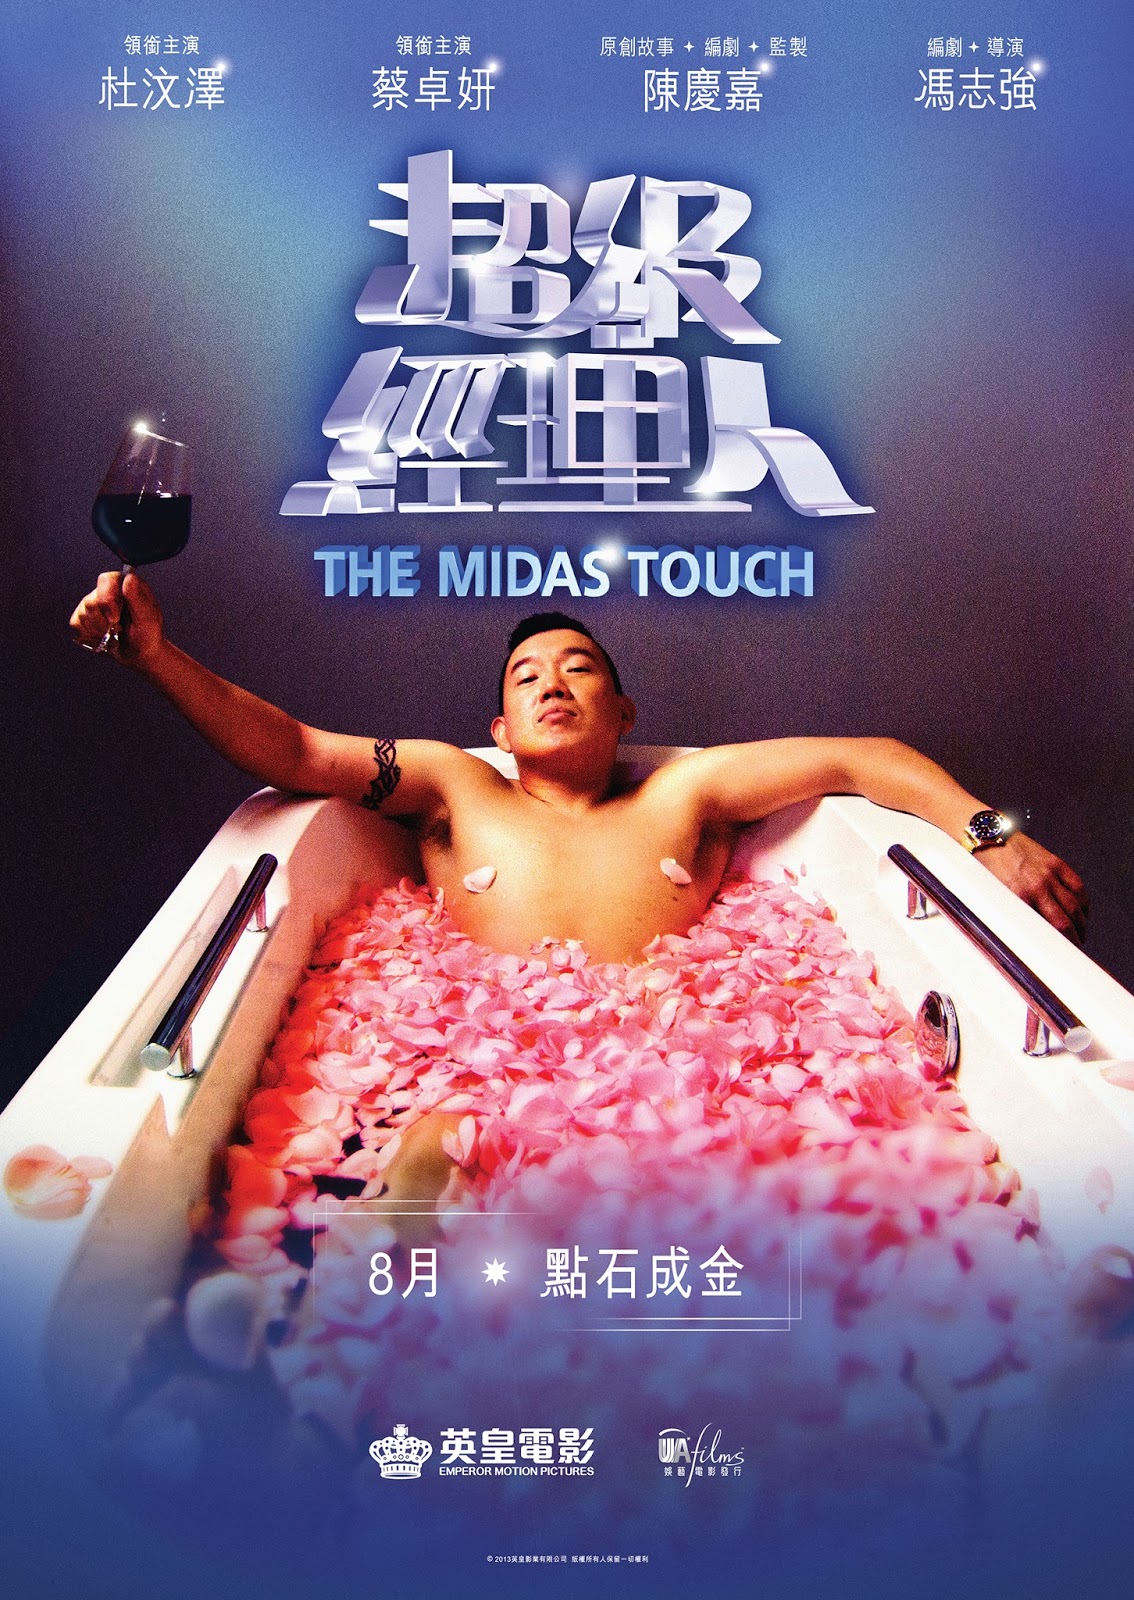 Midas touch kiss of life перевод. Midas Touch. The Midas Touch (2020). Midas Touch movie.